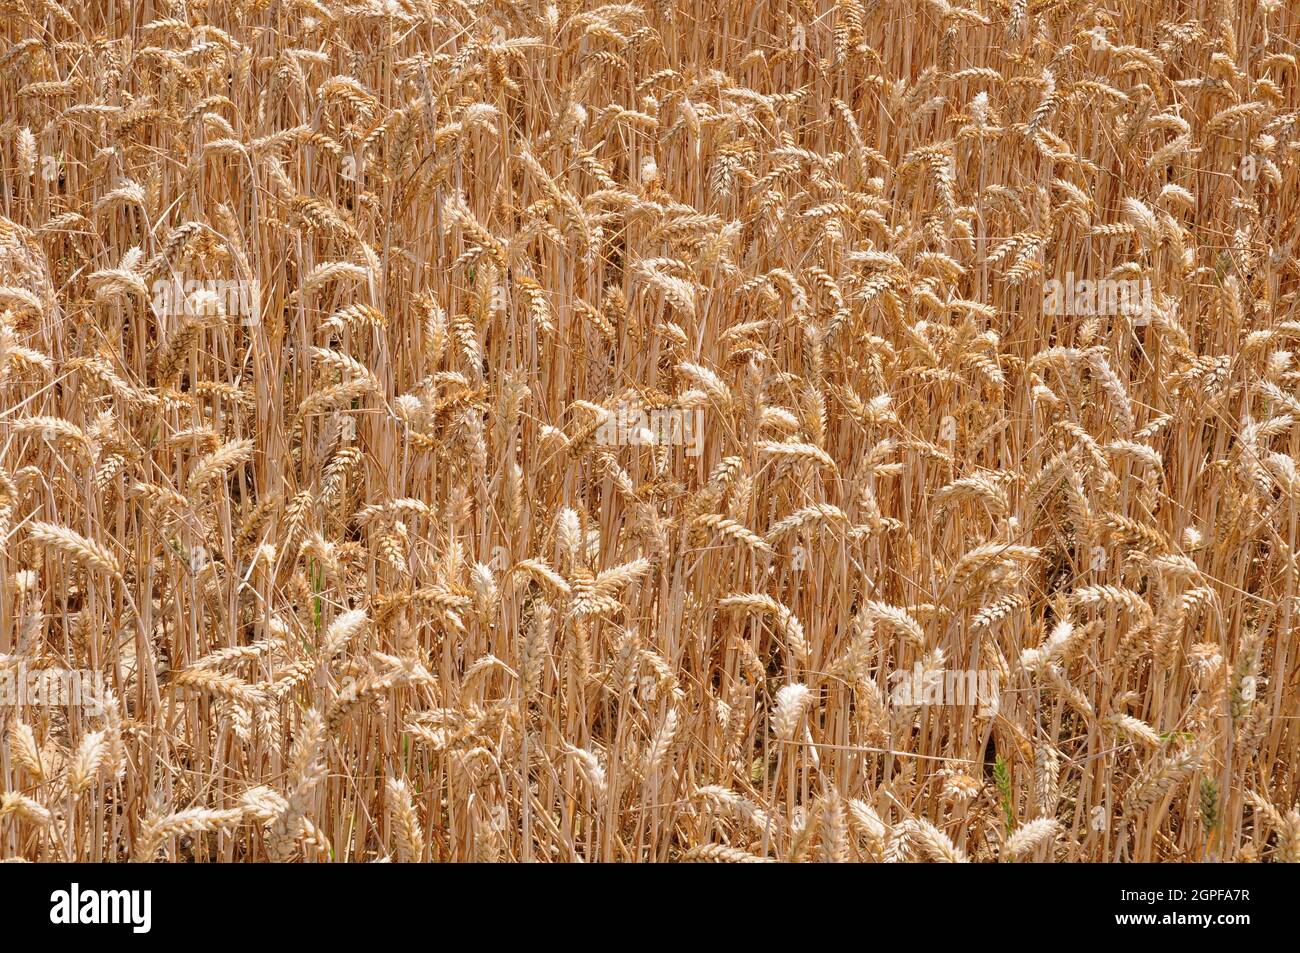 Crop of ripening wheat. Stock Photo